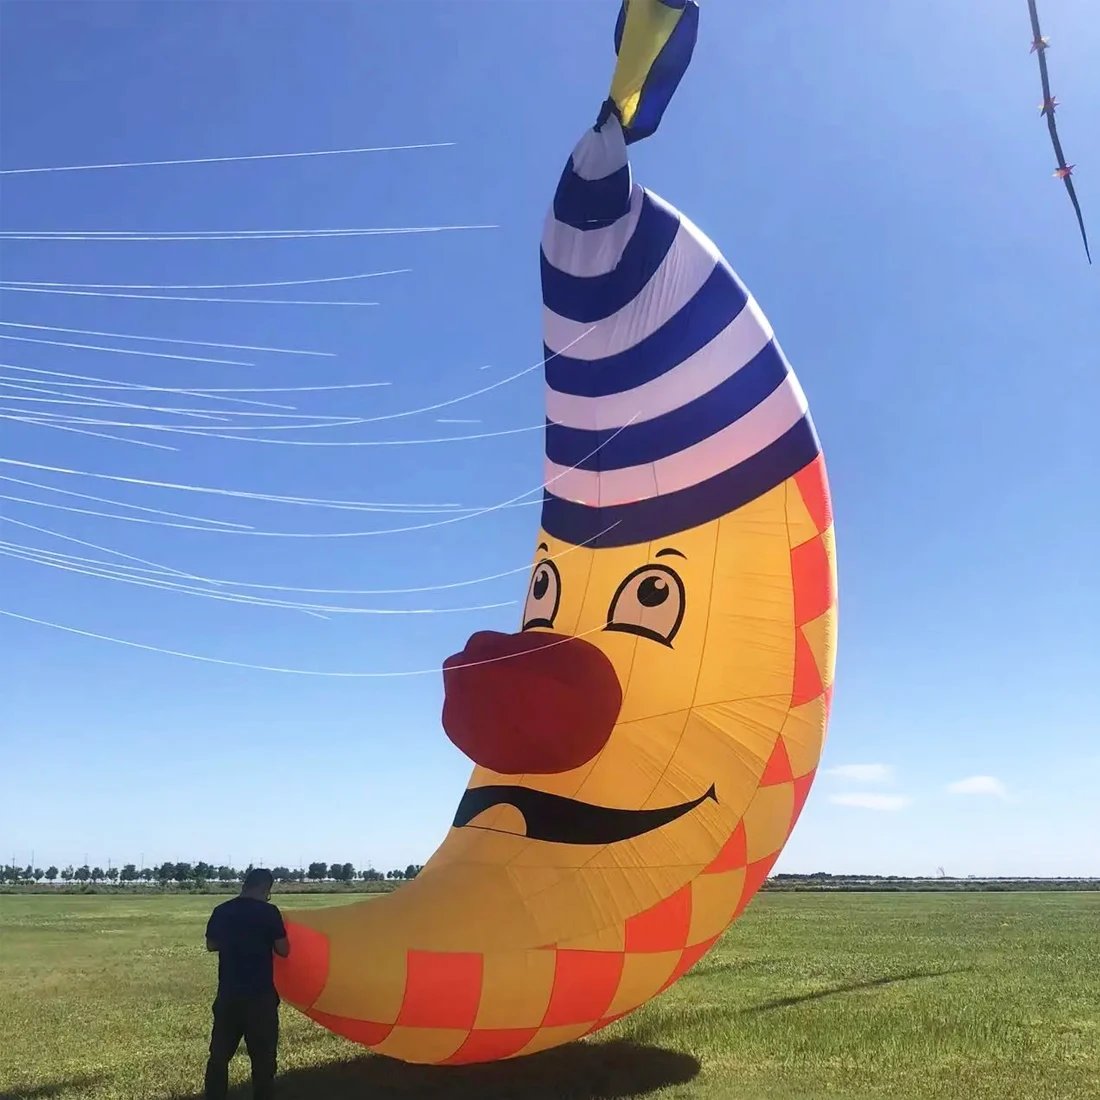 9KM 10m Moon Kite Line Laundry Pendant Soft Inflatable Show Kite for Kite Festival 30D Ripstop Nylon with Bag